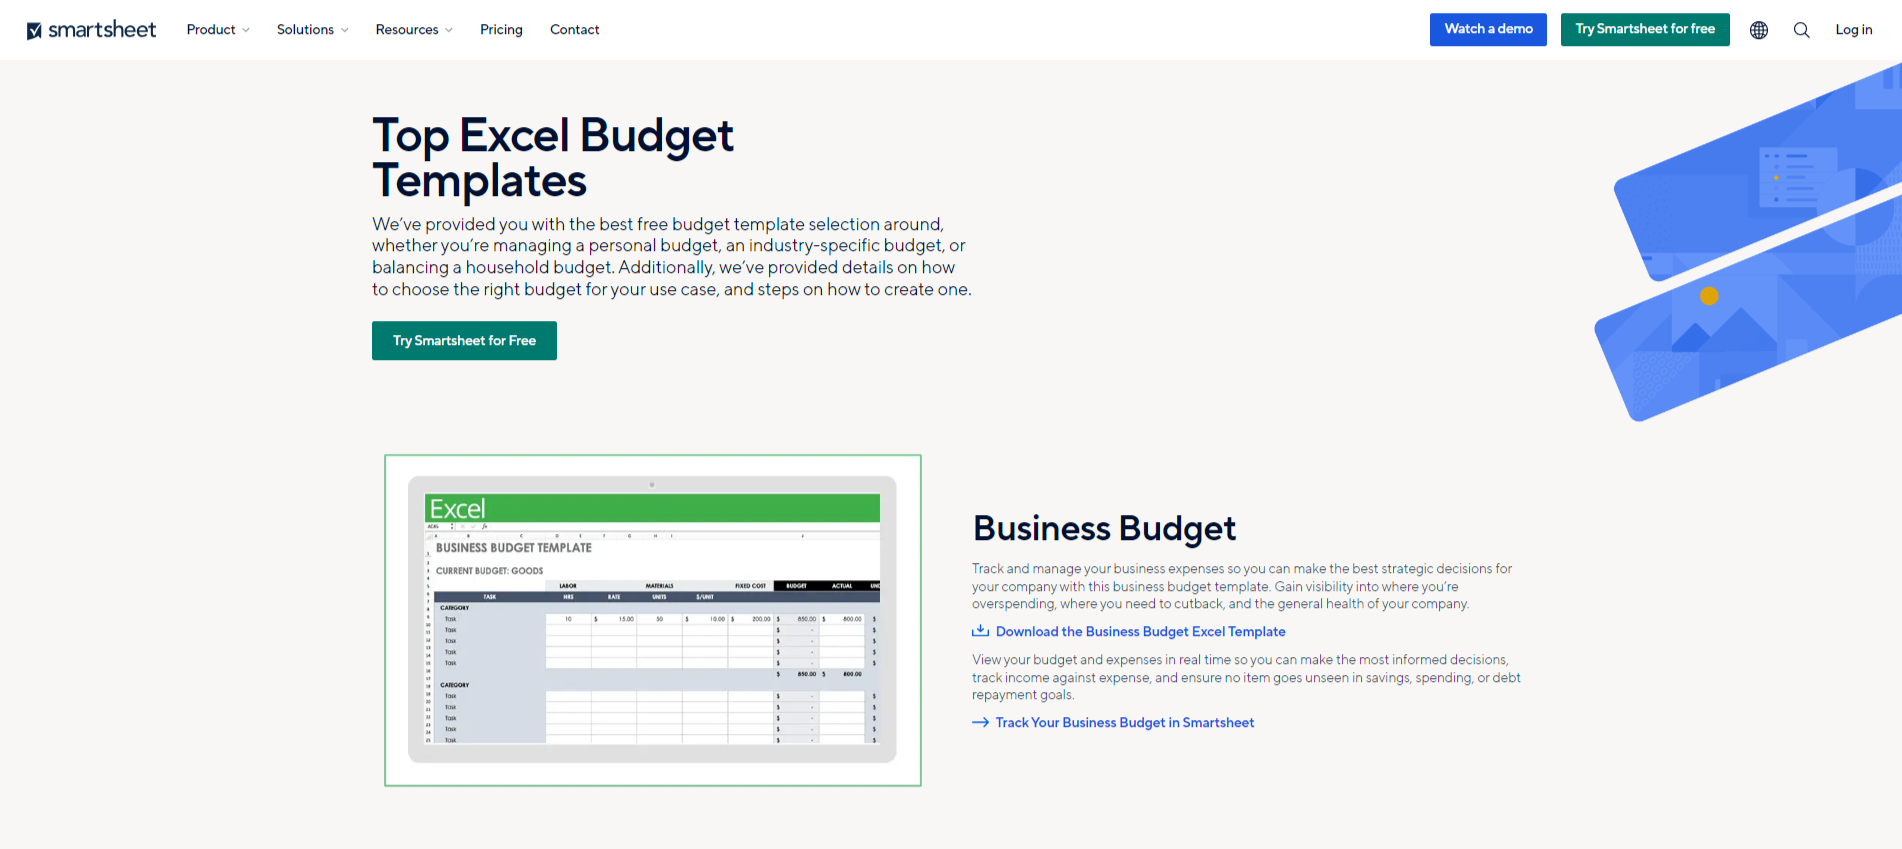 Smartsheet Top Excel Budget Templates